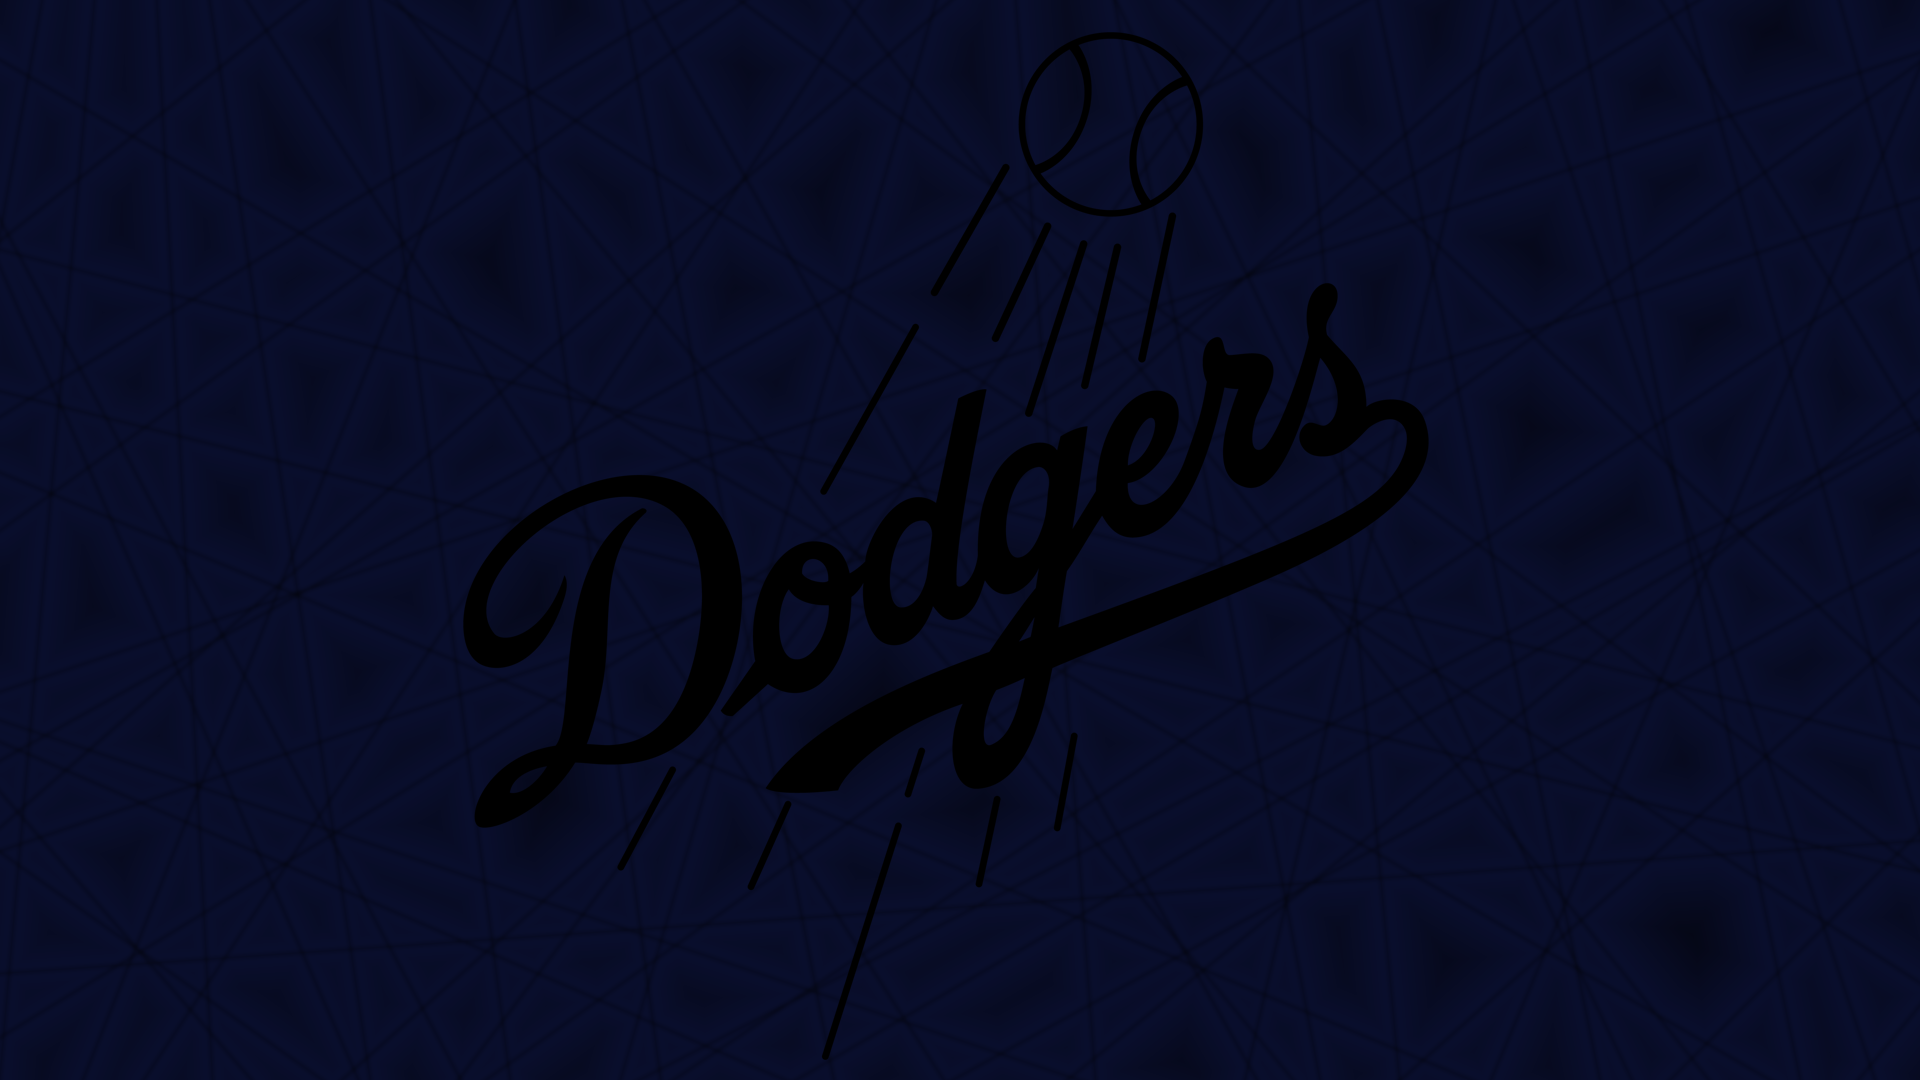 Enjoy this new Los Angeles Dodgers desktop background. Los